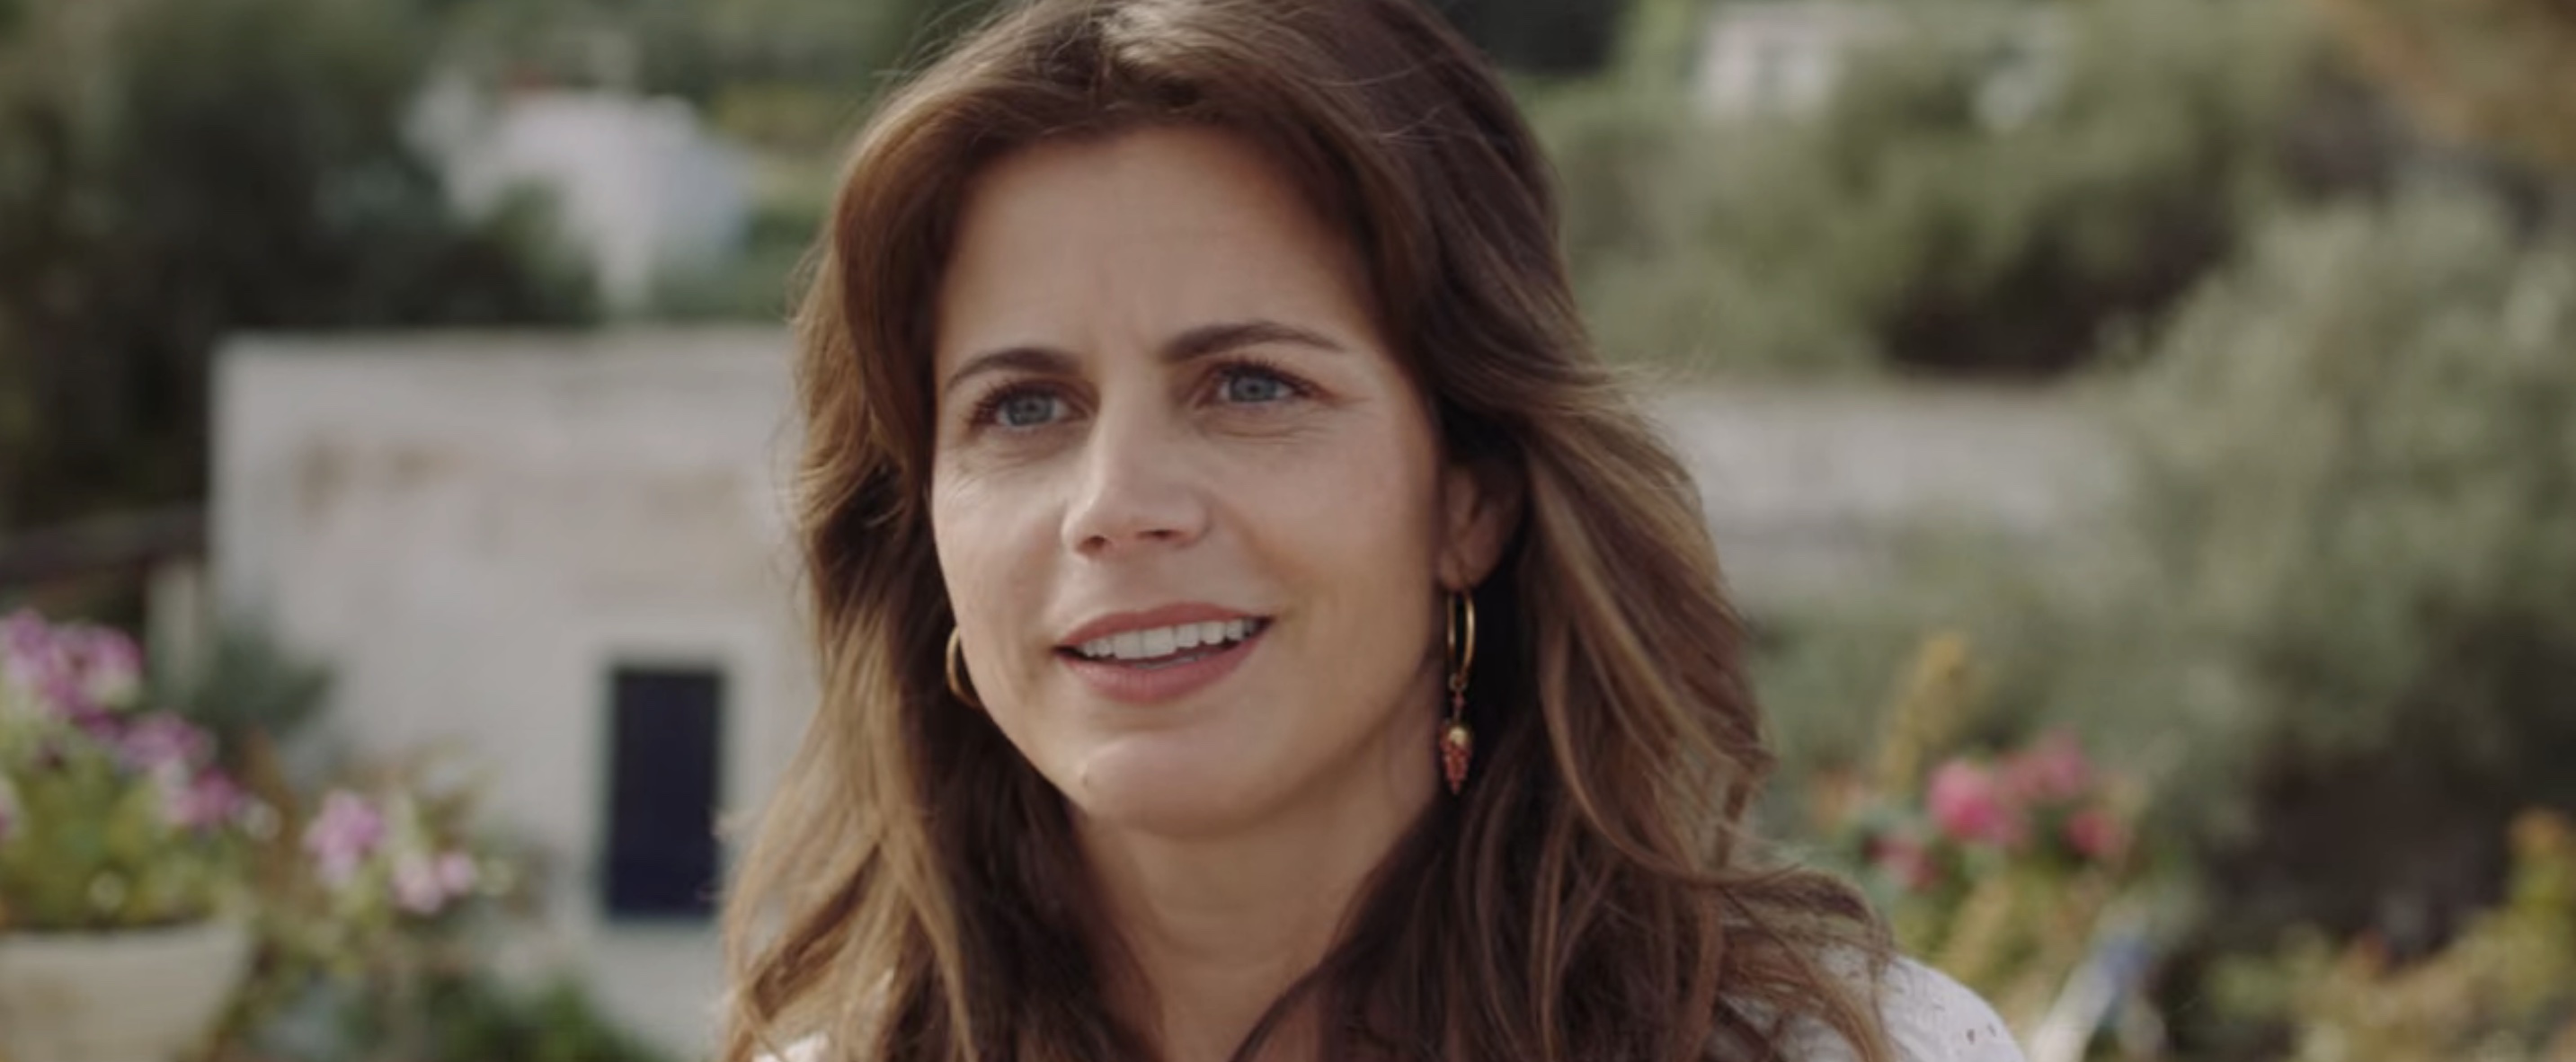 Stromboli Cast on Netflix - Elise Schaap as Sara